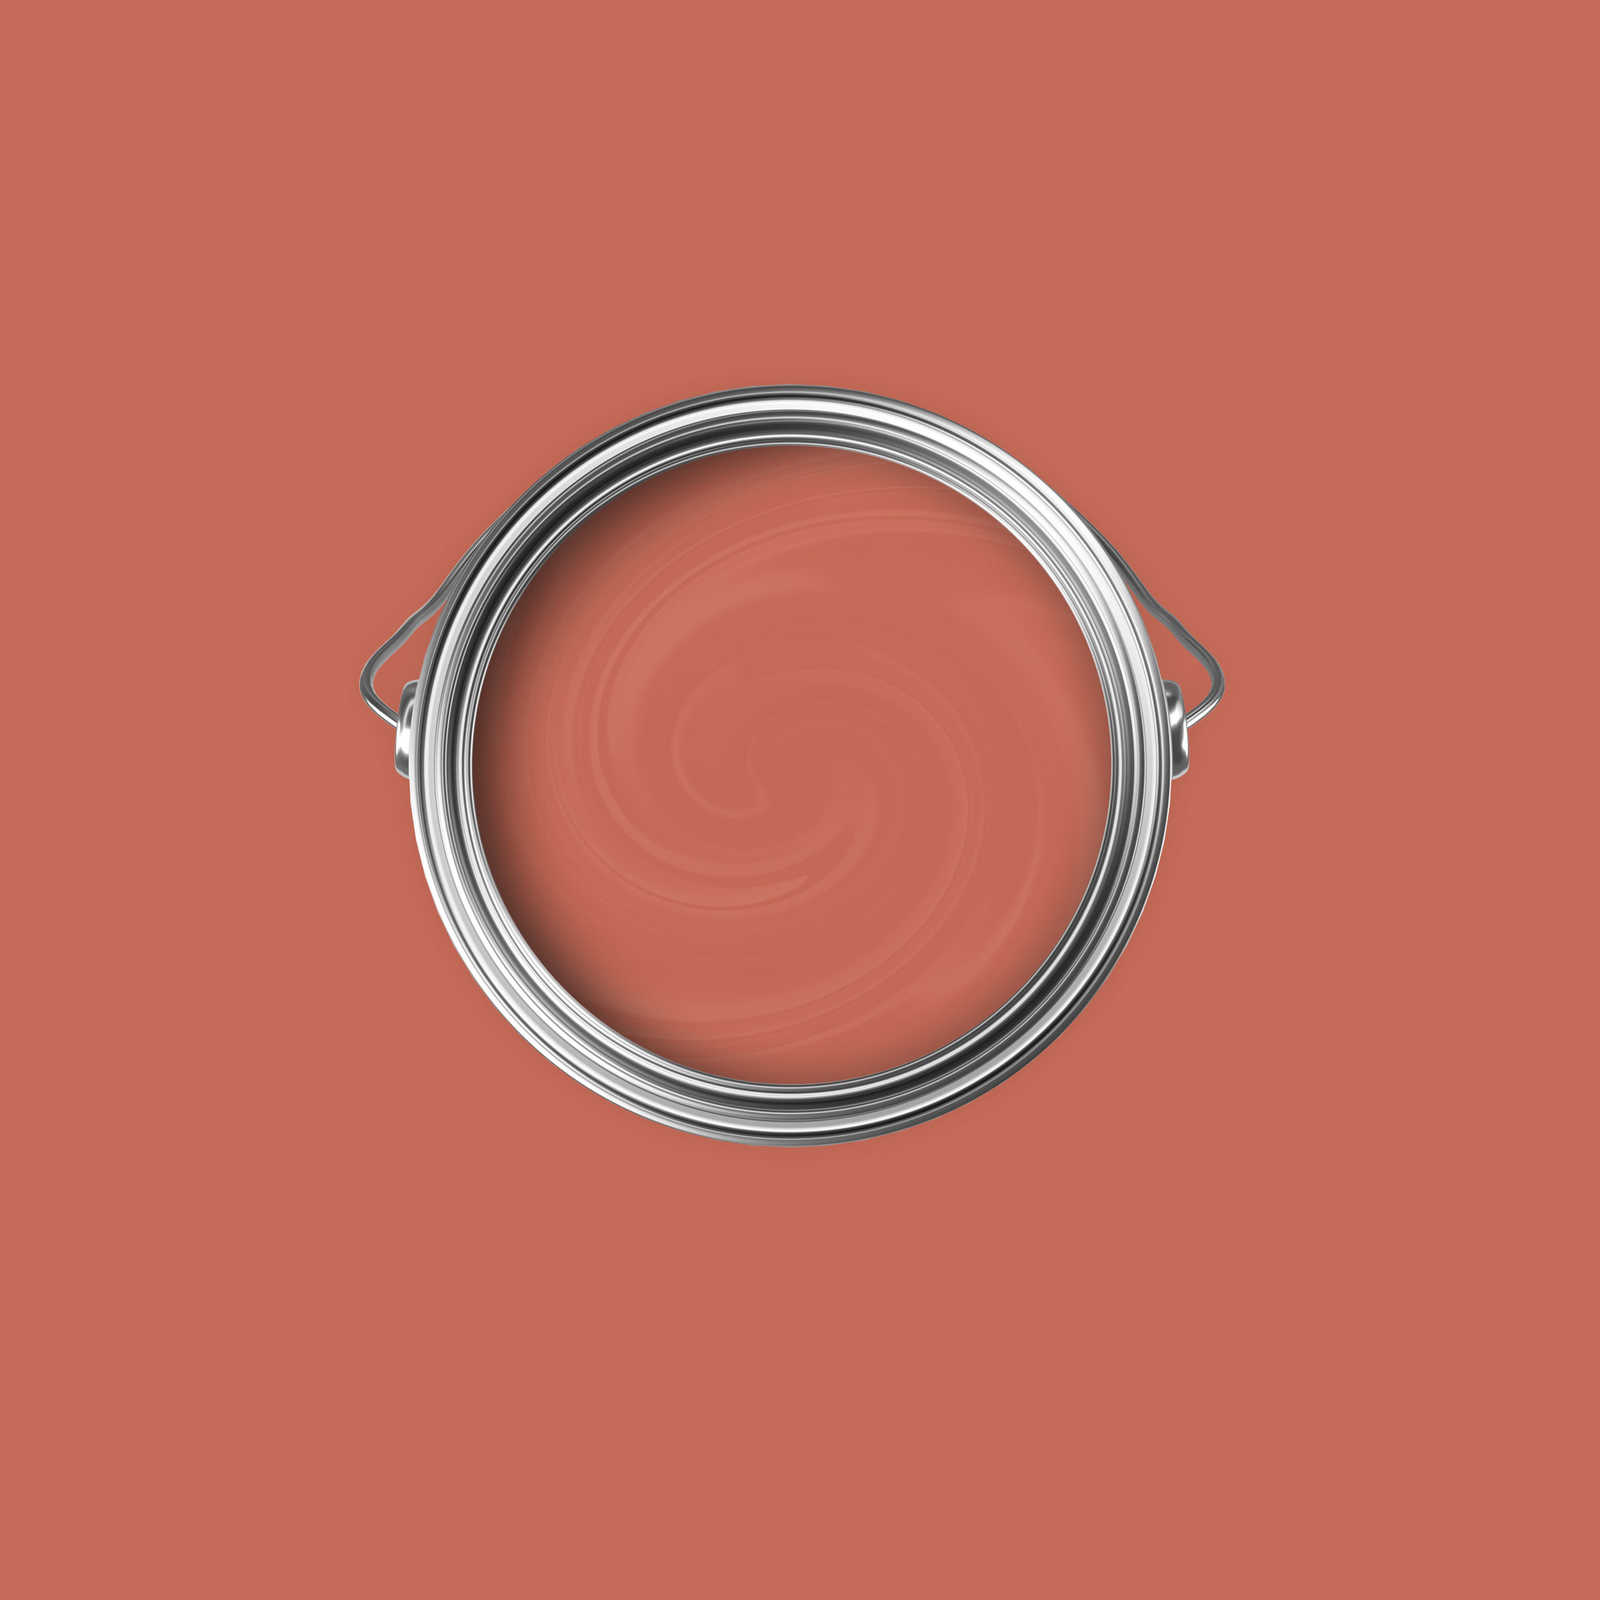             Premium Wall Paint Pleasant Blood Orange »Pretty Peach« NW907 – 2.5 litre
        